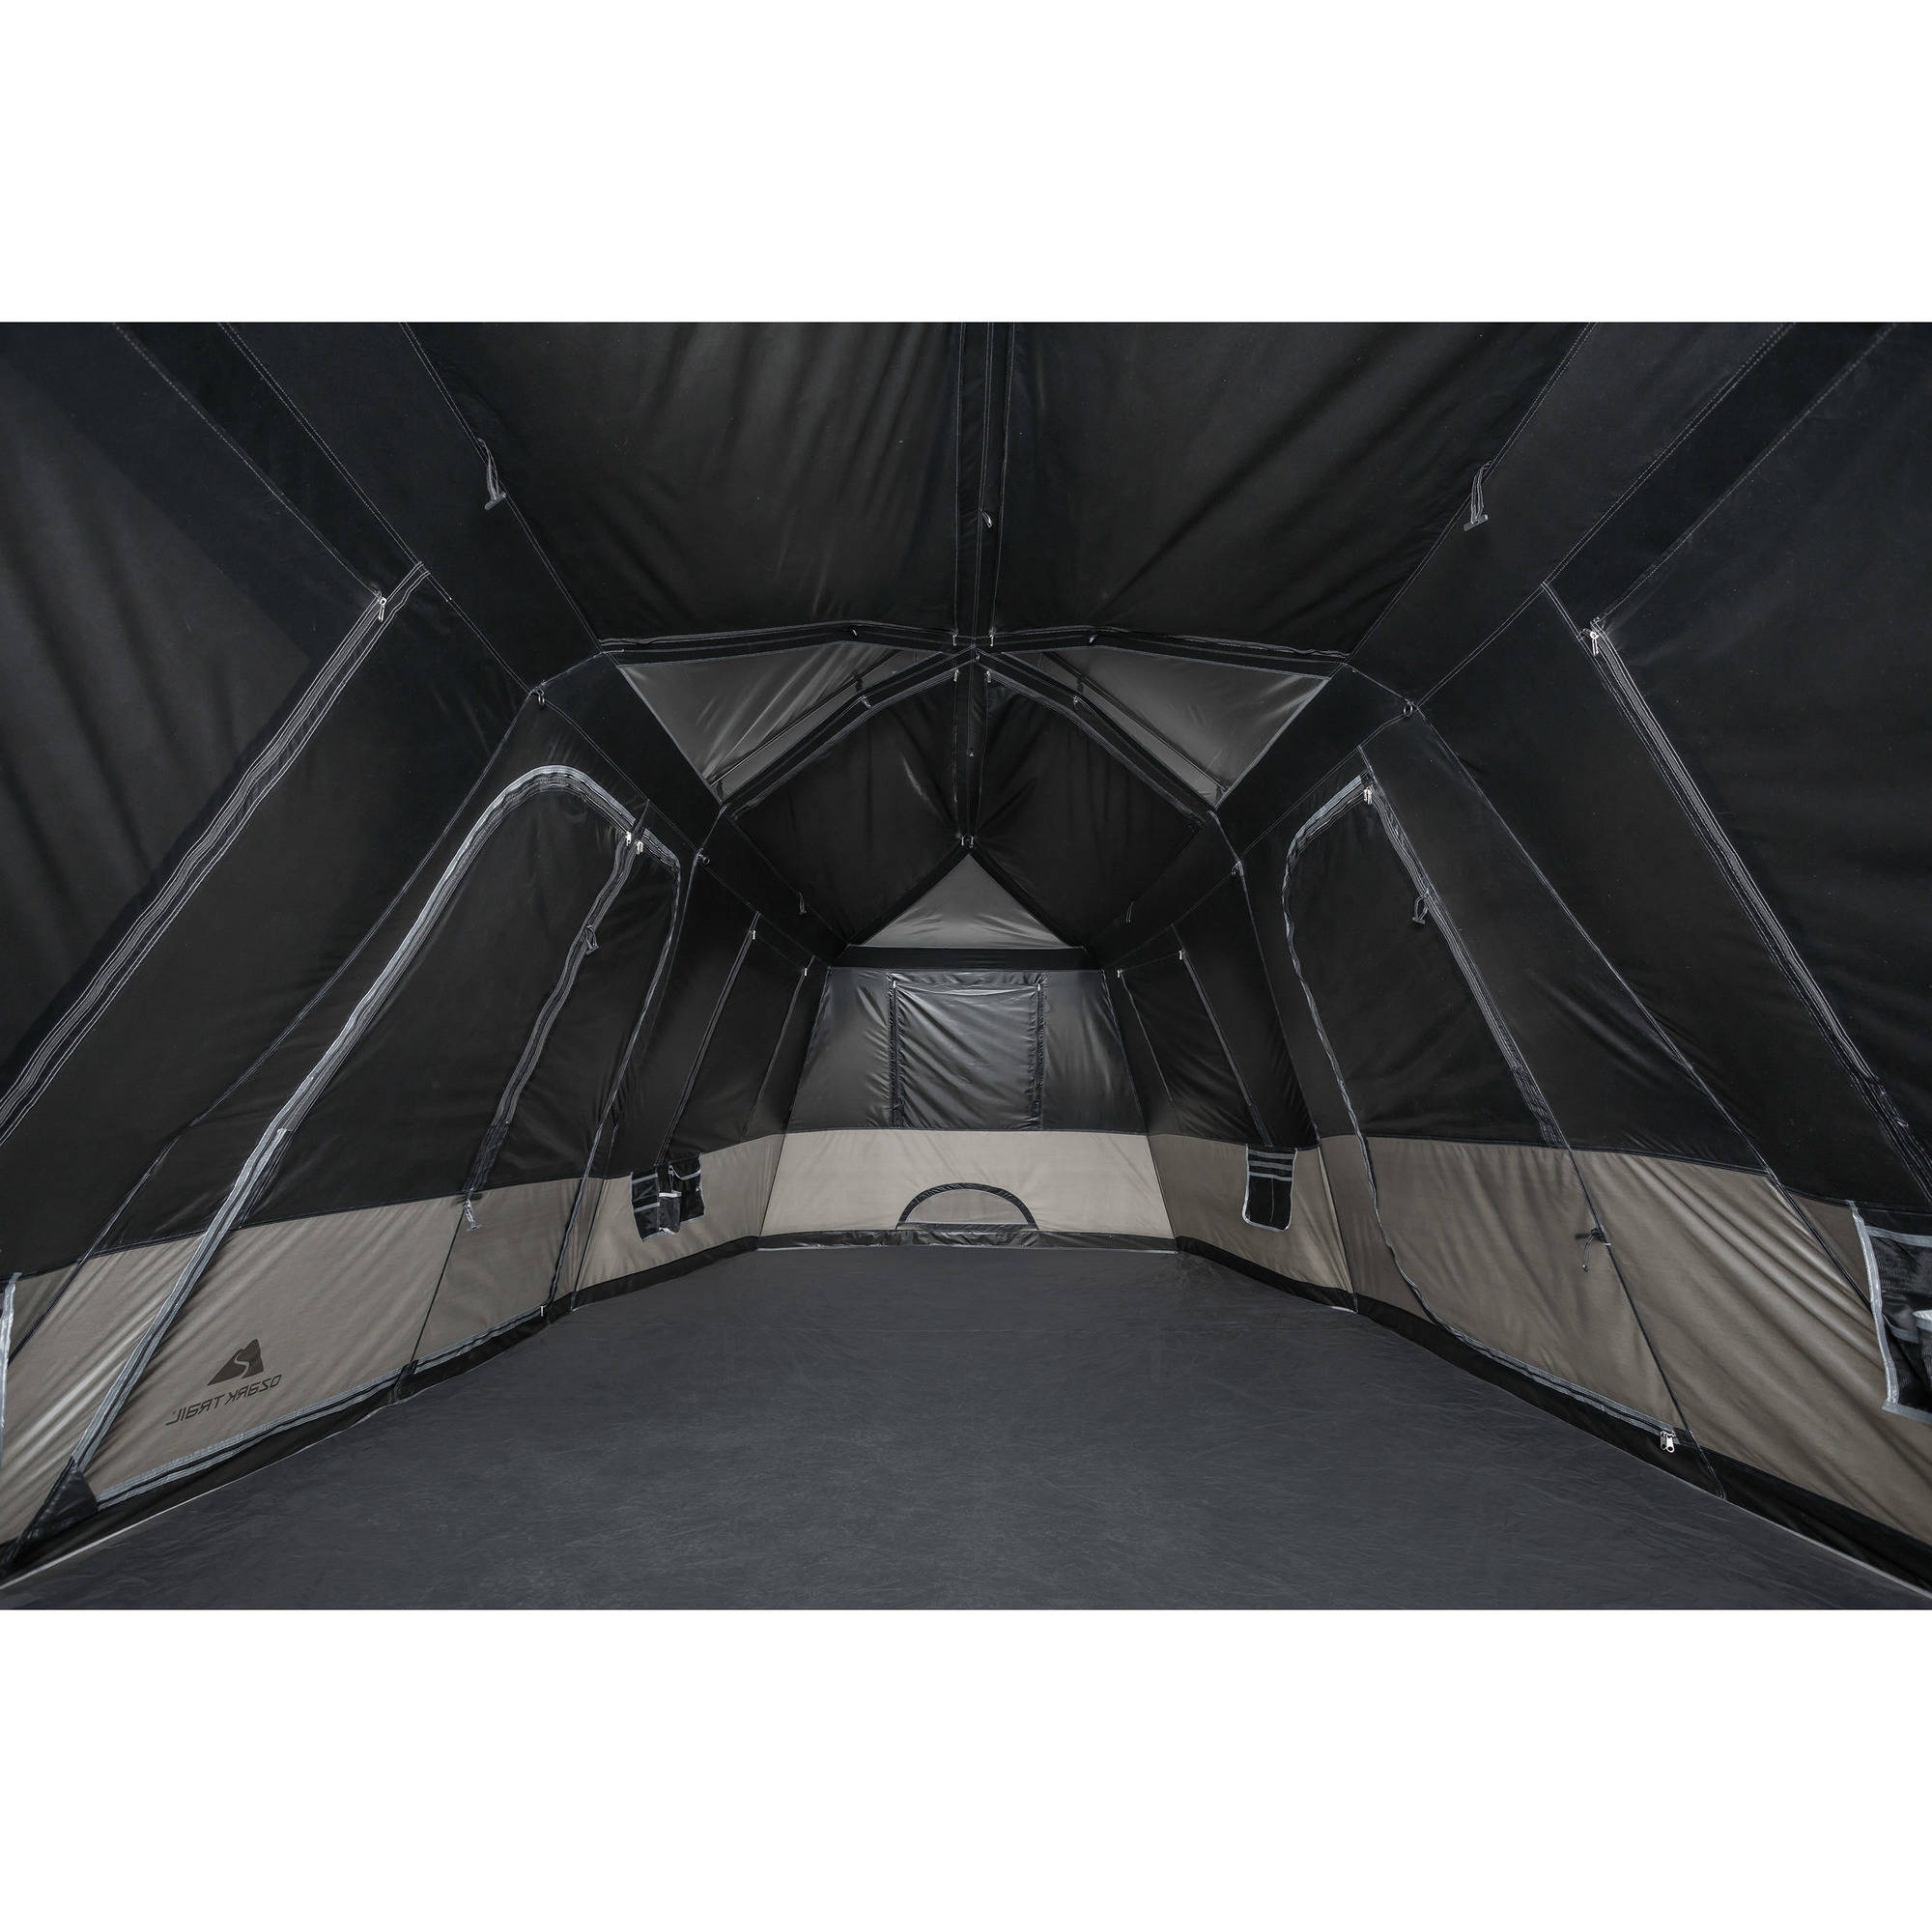 Ozark Trail 20' x 10' Dark Rest Instant Cabin Tent, Sleeps 12, 45.72 lbs - image 3 of 9